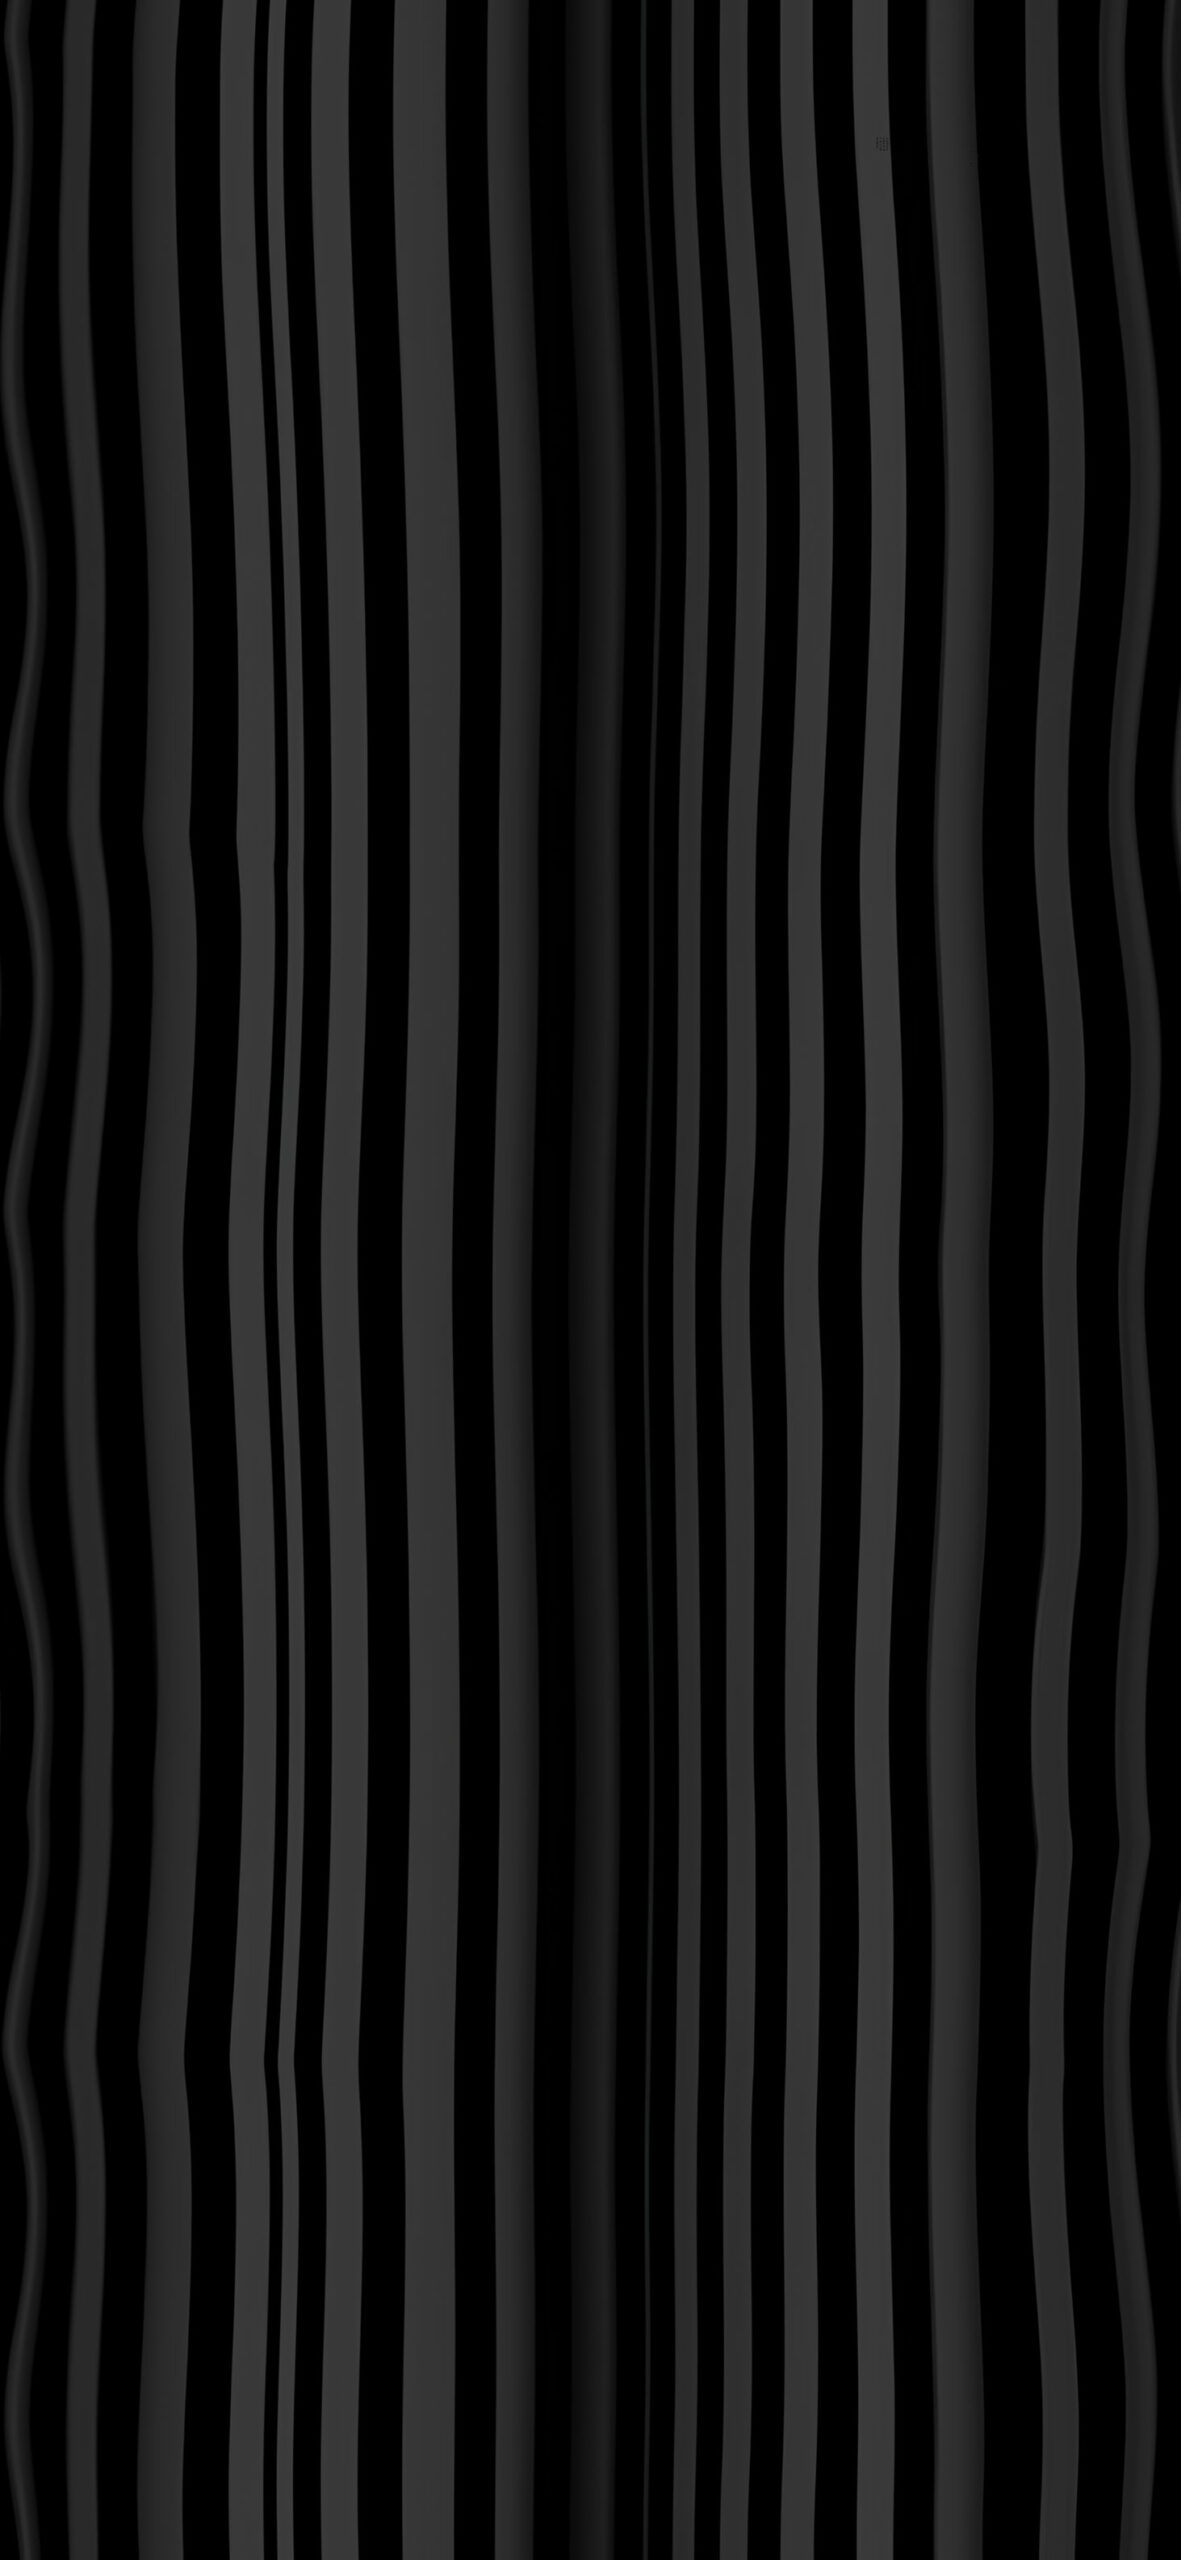 Zebra Lines Black & White Wallpaper Black & White Lines Wallpa